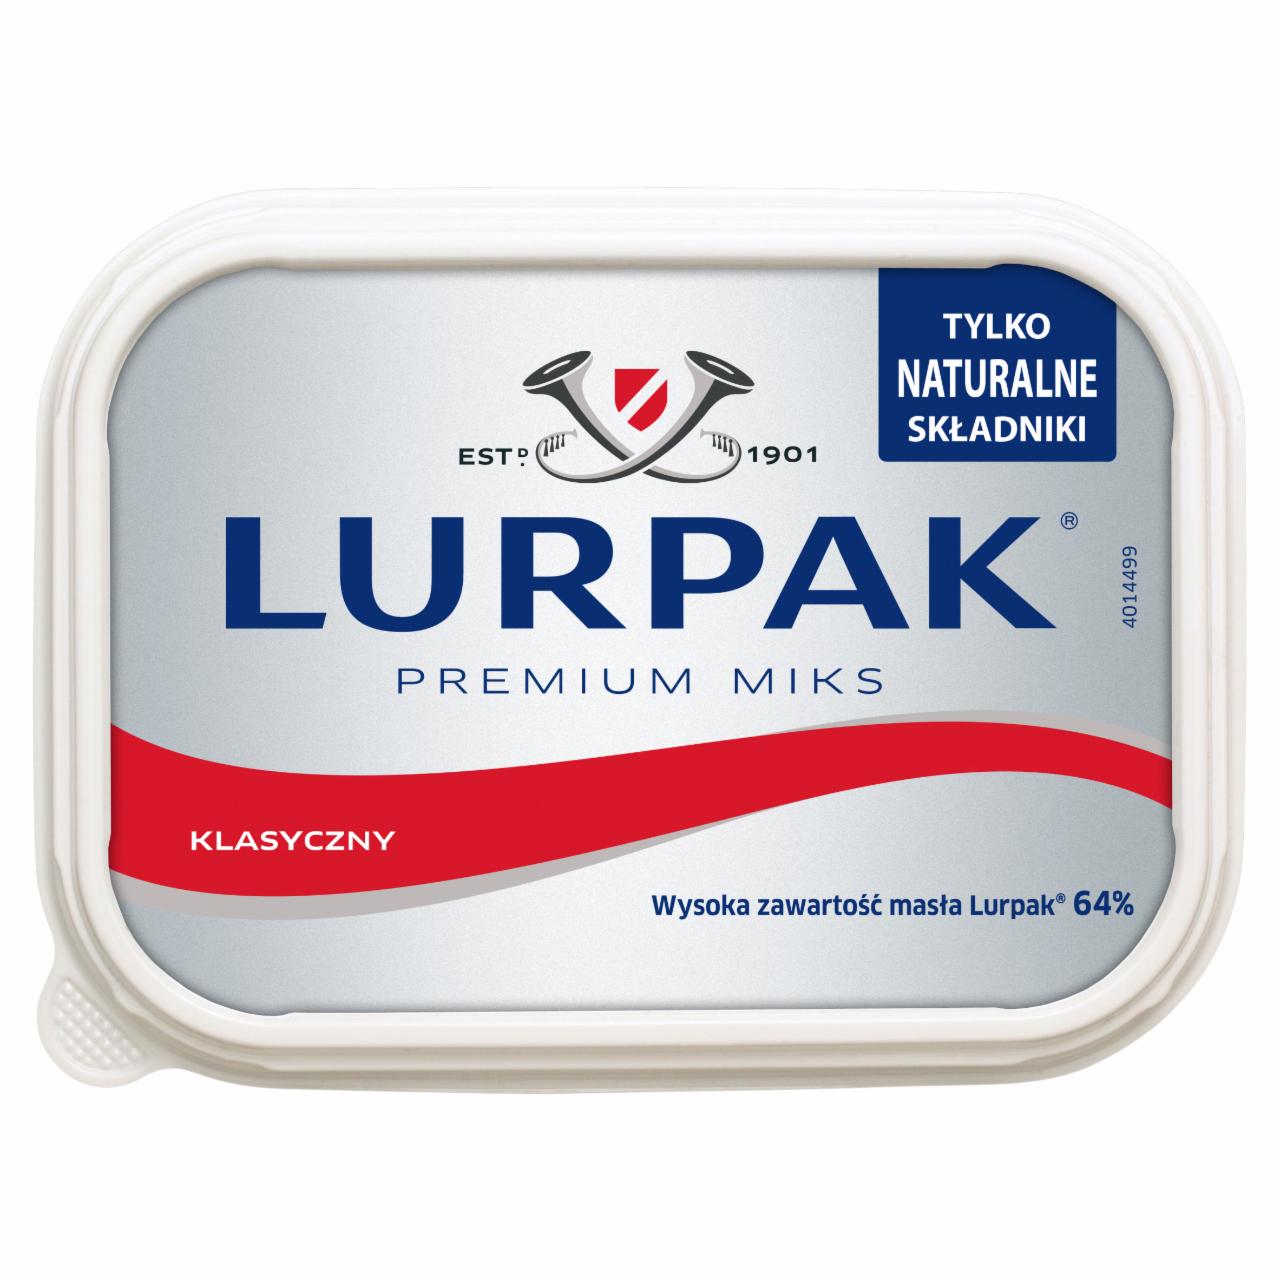 Zdjęcia - Lurpak Premium miks klasyczny 200 g